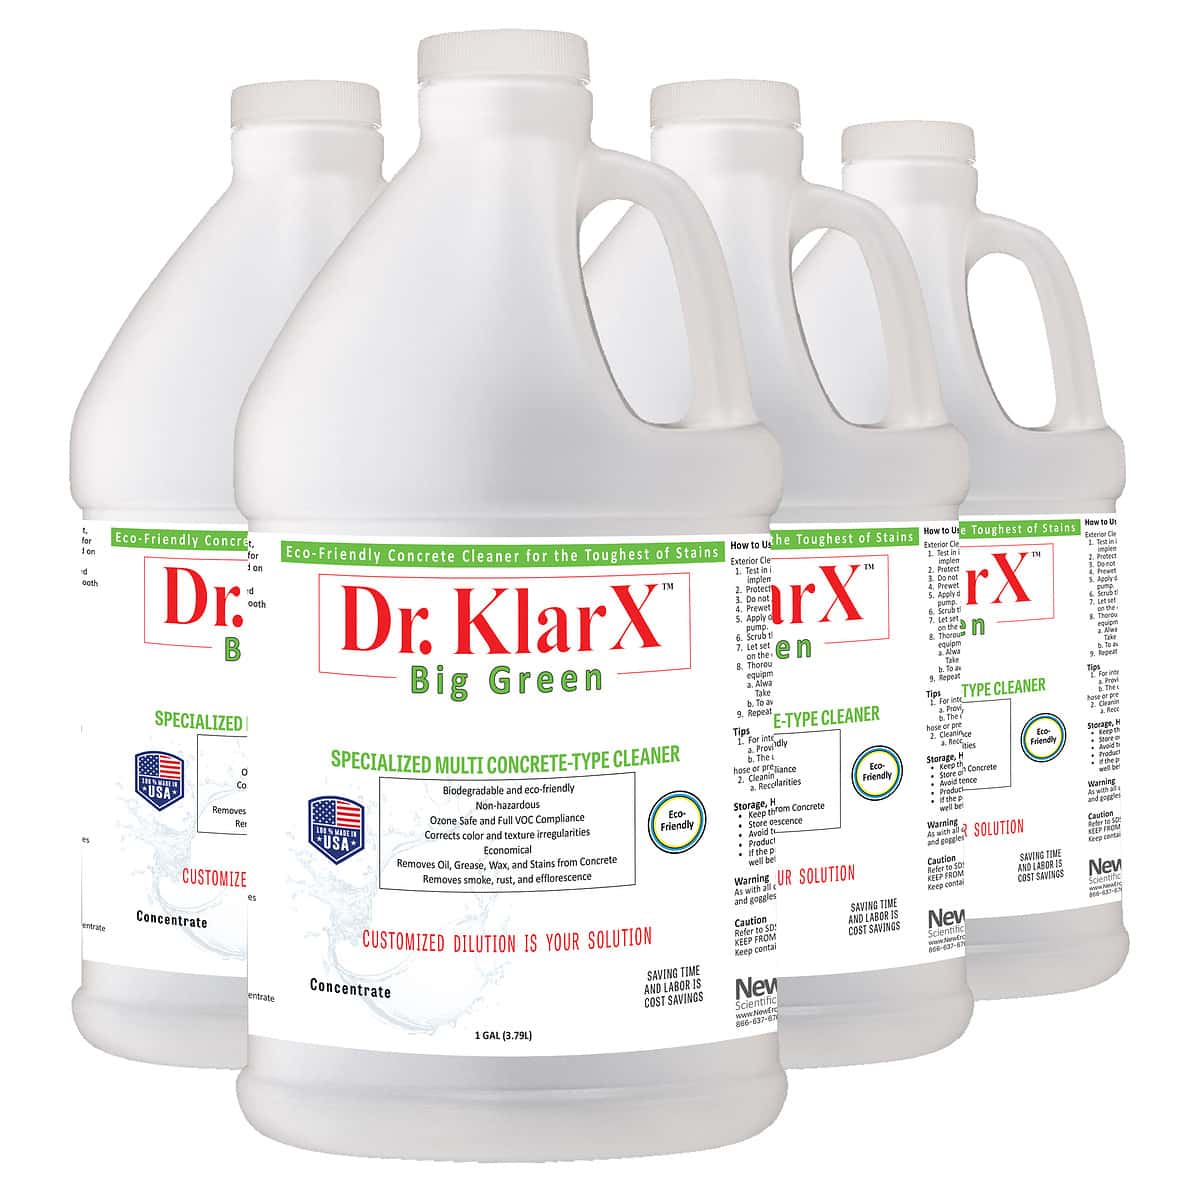 Dr. KlarX Big Green 4/1-gallon bottle